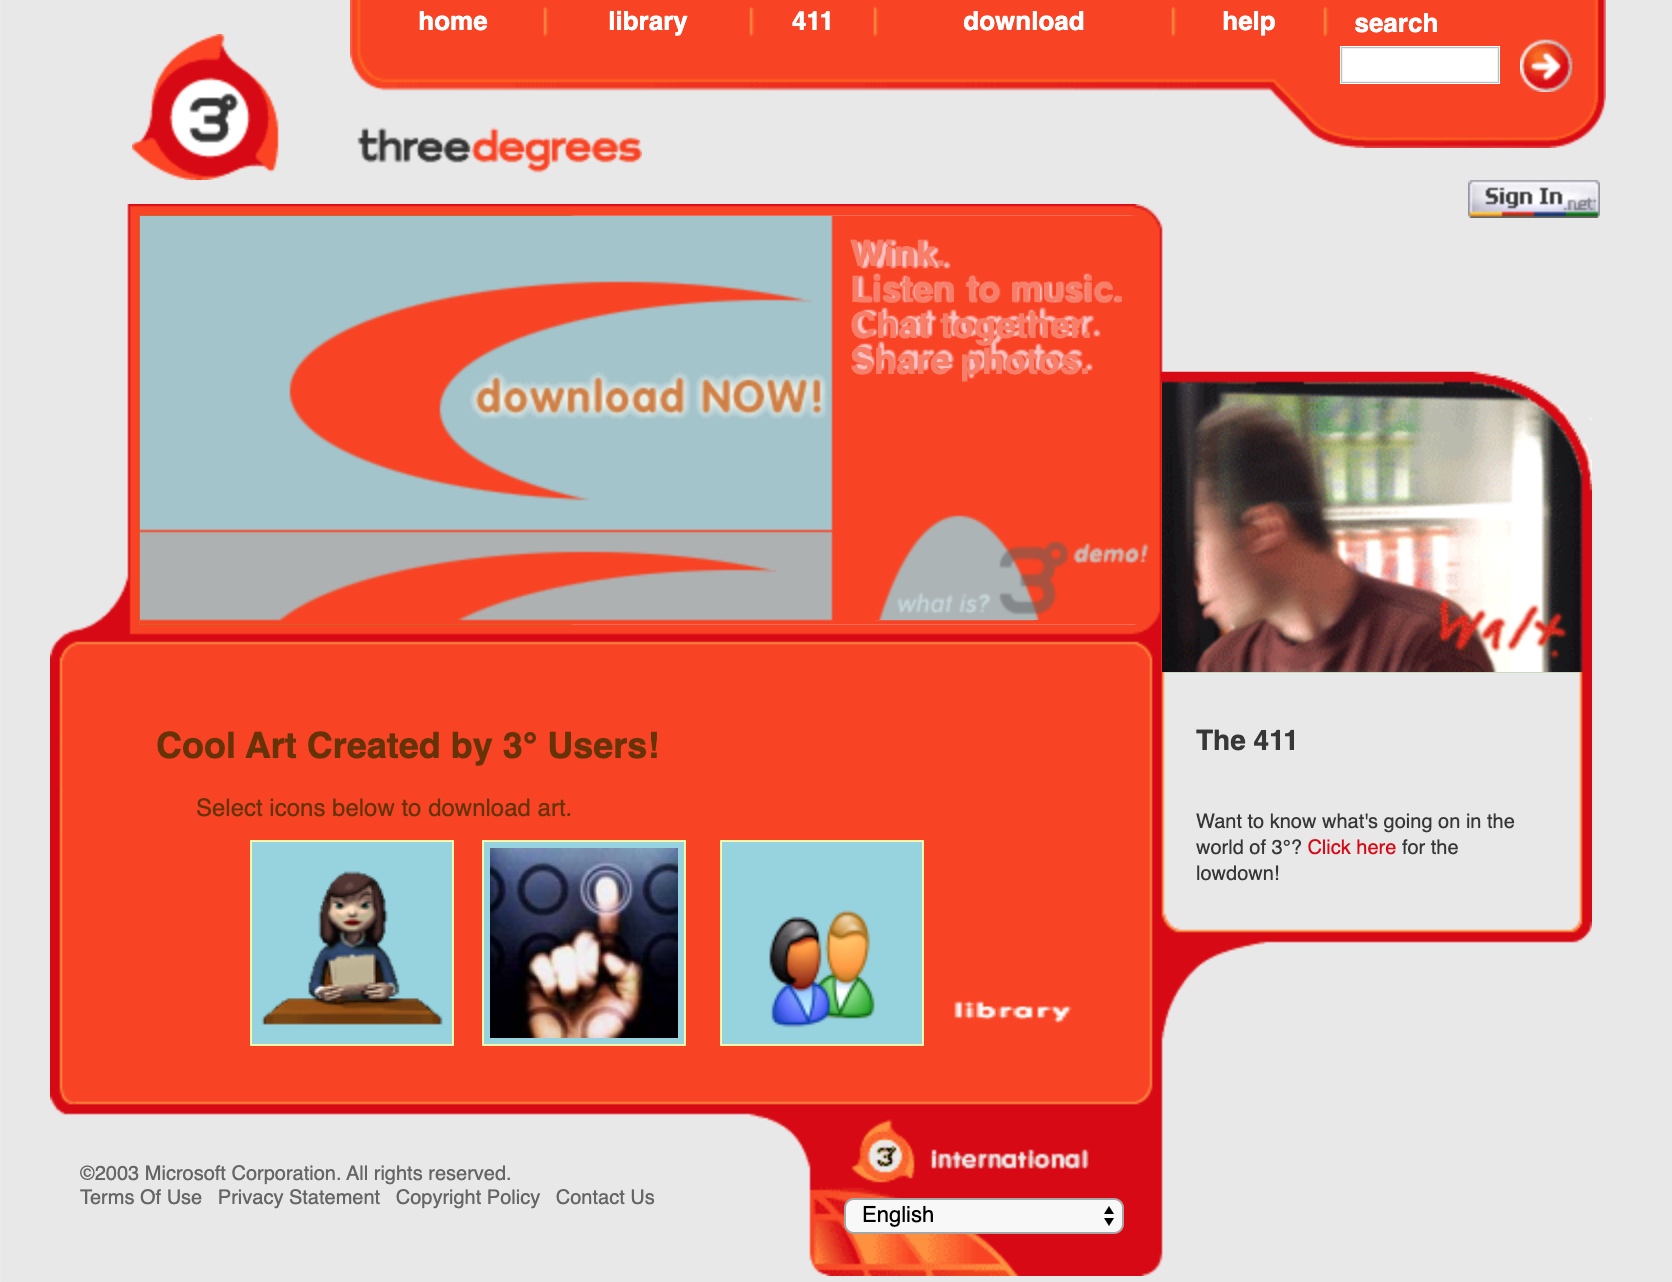 Microsoft ThreeDegrees Website (2003)